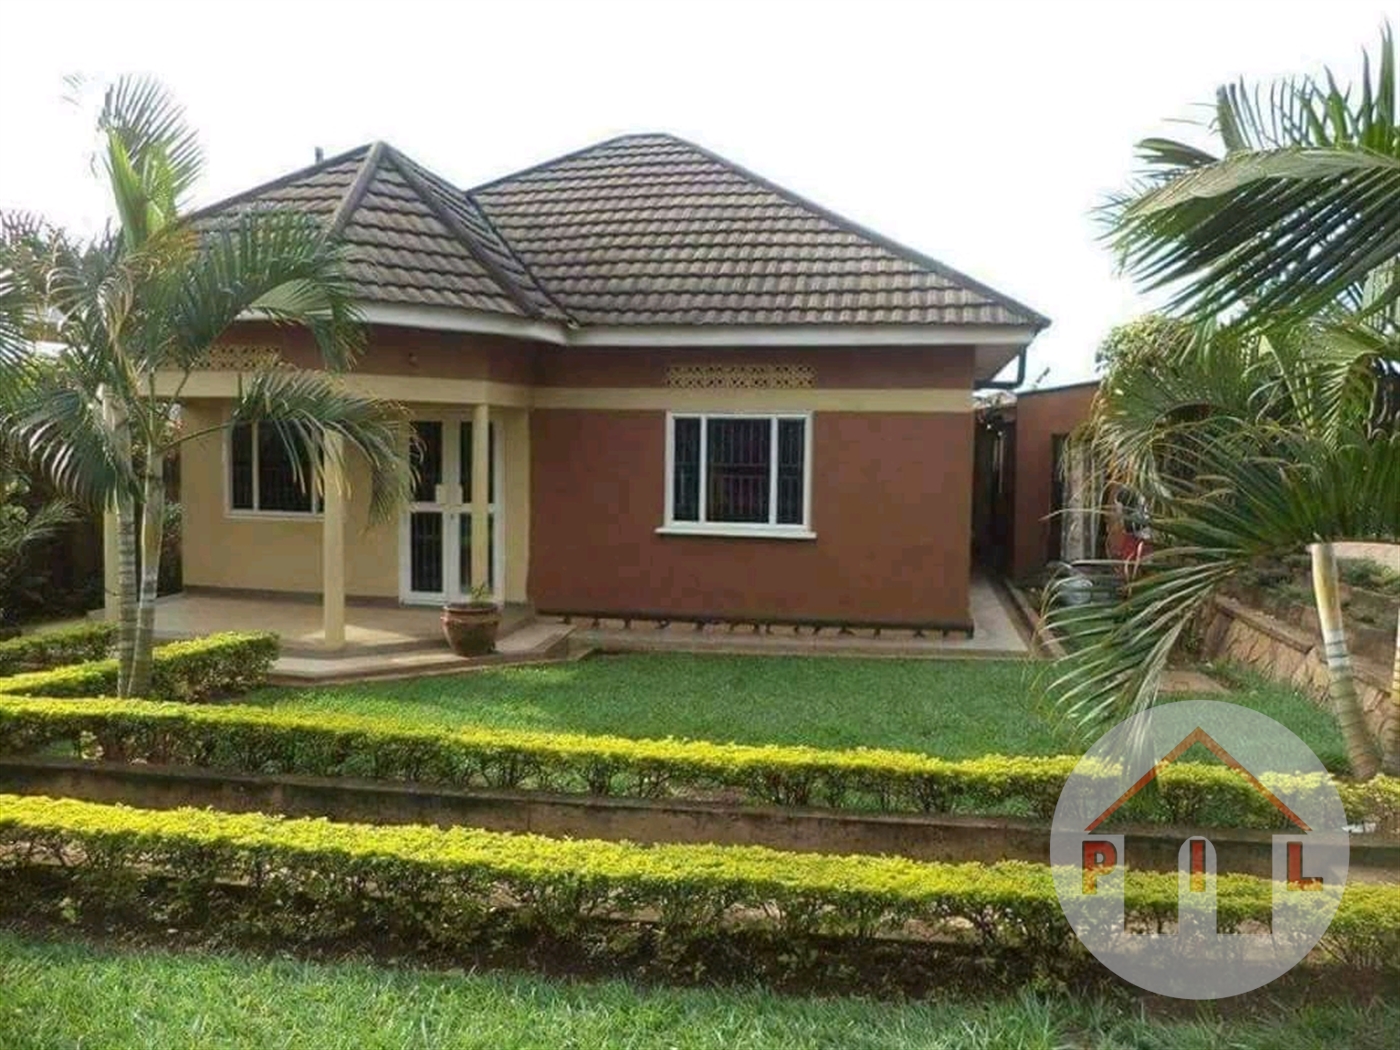 2 Bedroom House Plans And Designs In Uganda | Psoriasisguru.com